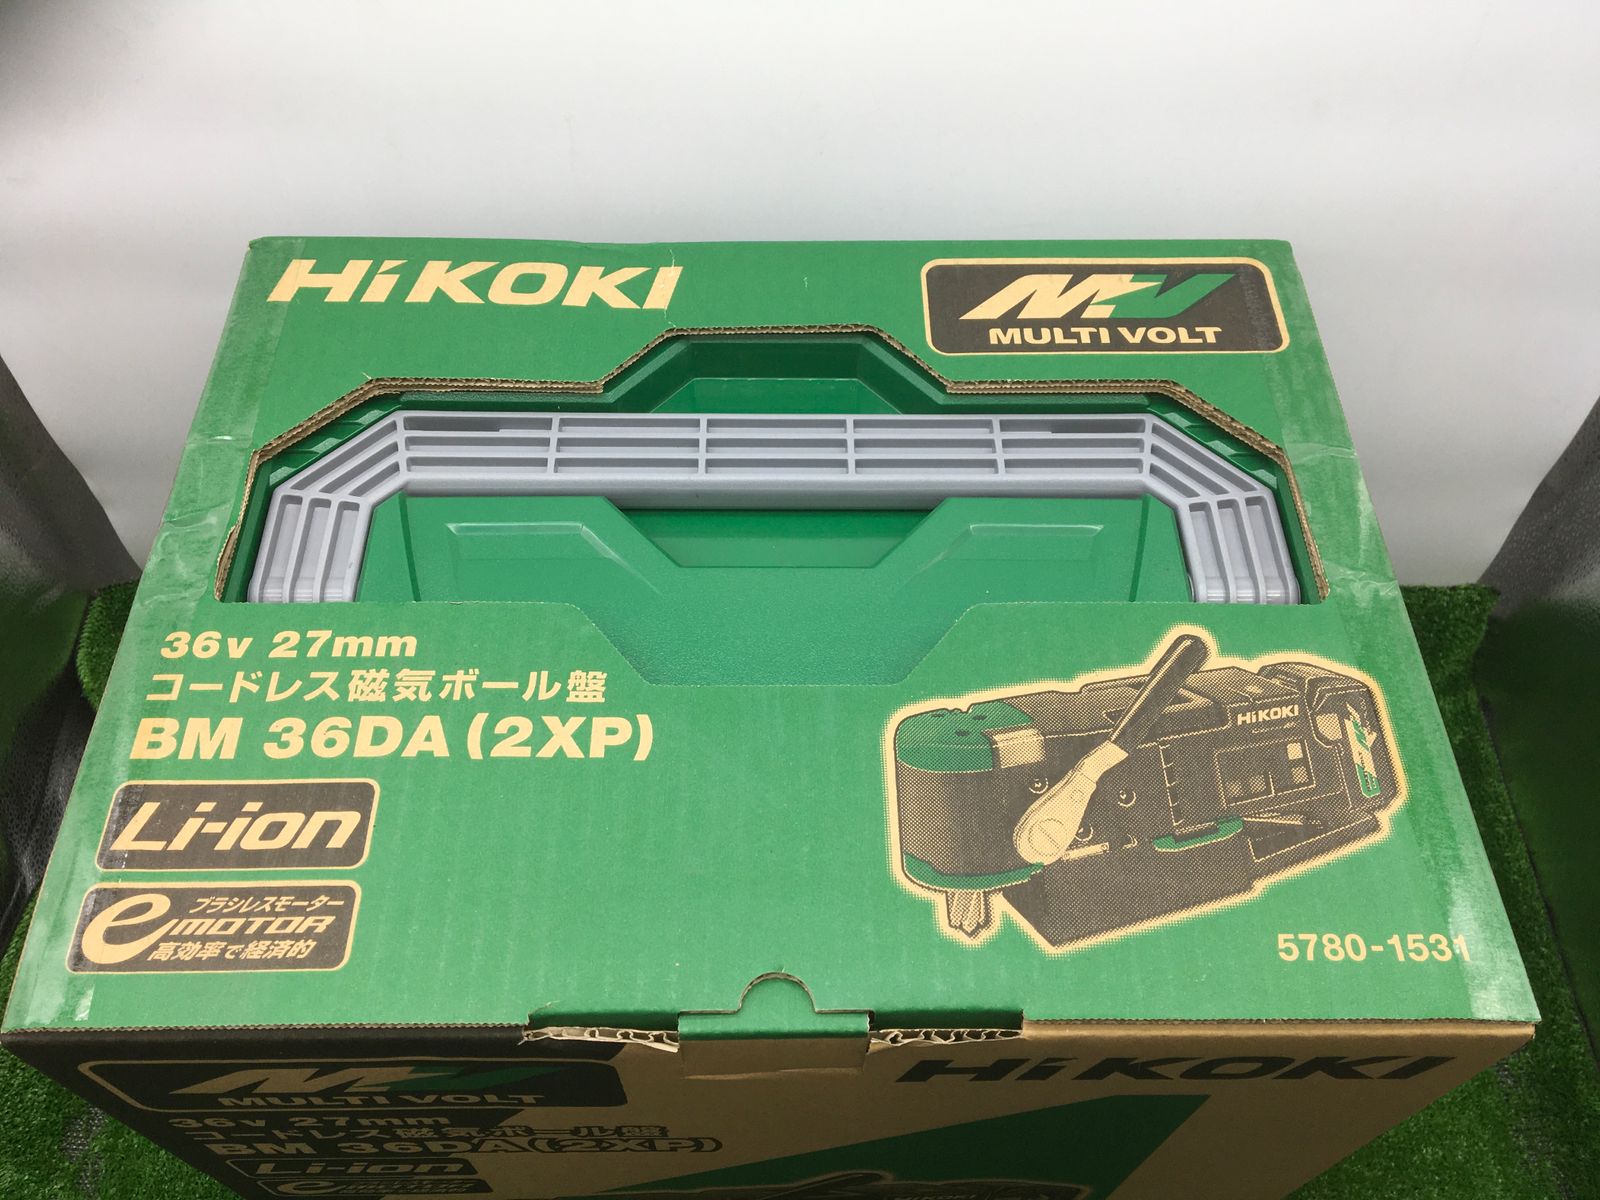 HIKOKI マルチボルト コードレス磁気ボール盤 BM36DA(2XP) - 18